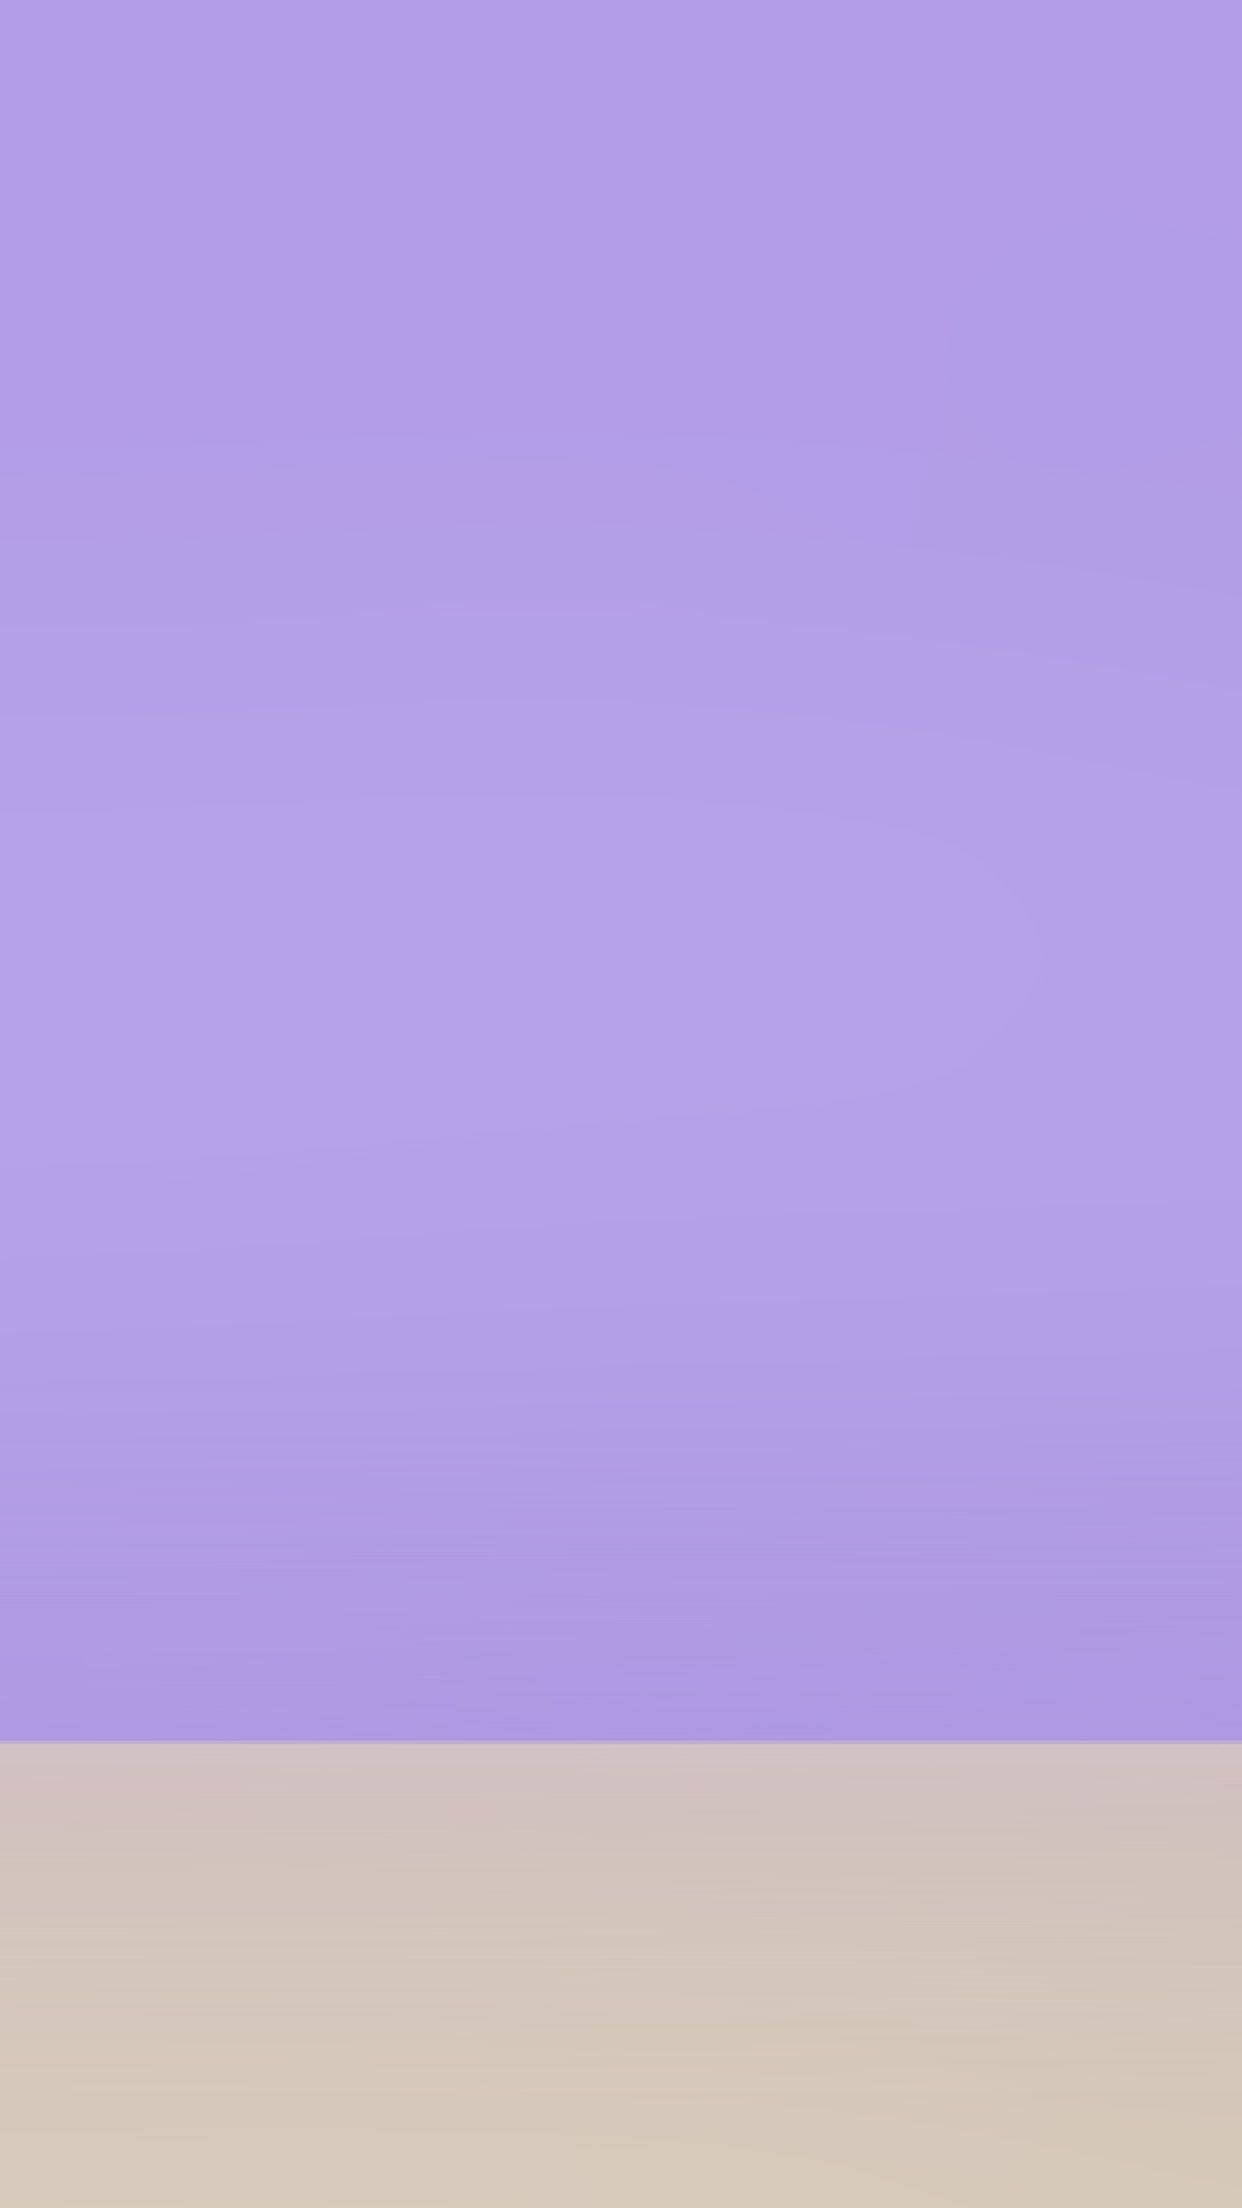 Flat Colorlovers Purple Blur Gradation Pastel Wallpaper